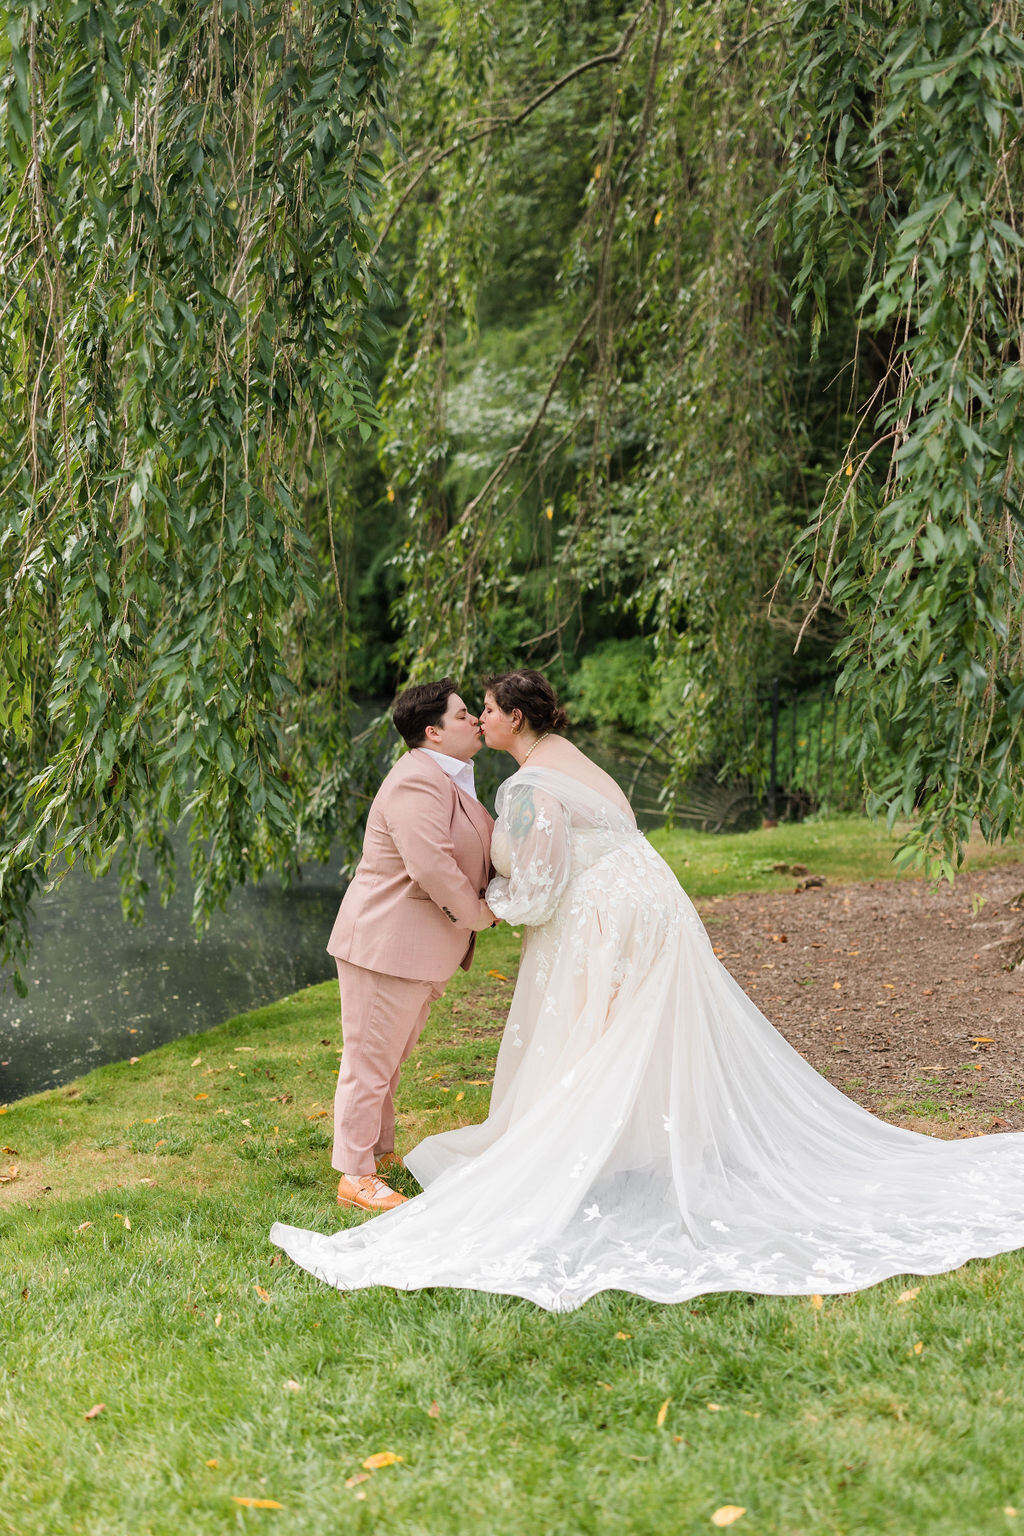 Longwood-Gardens-Lesbian-Wedding-Photos-byLGBTQ-owned-photography-company-Swiger-Photography-15.jpg